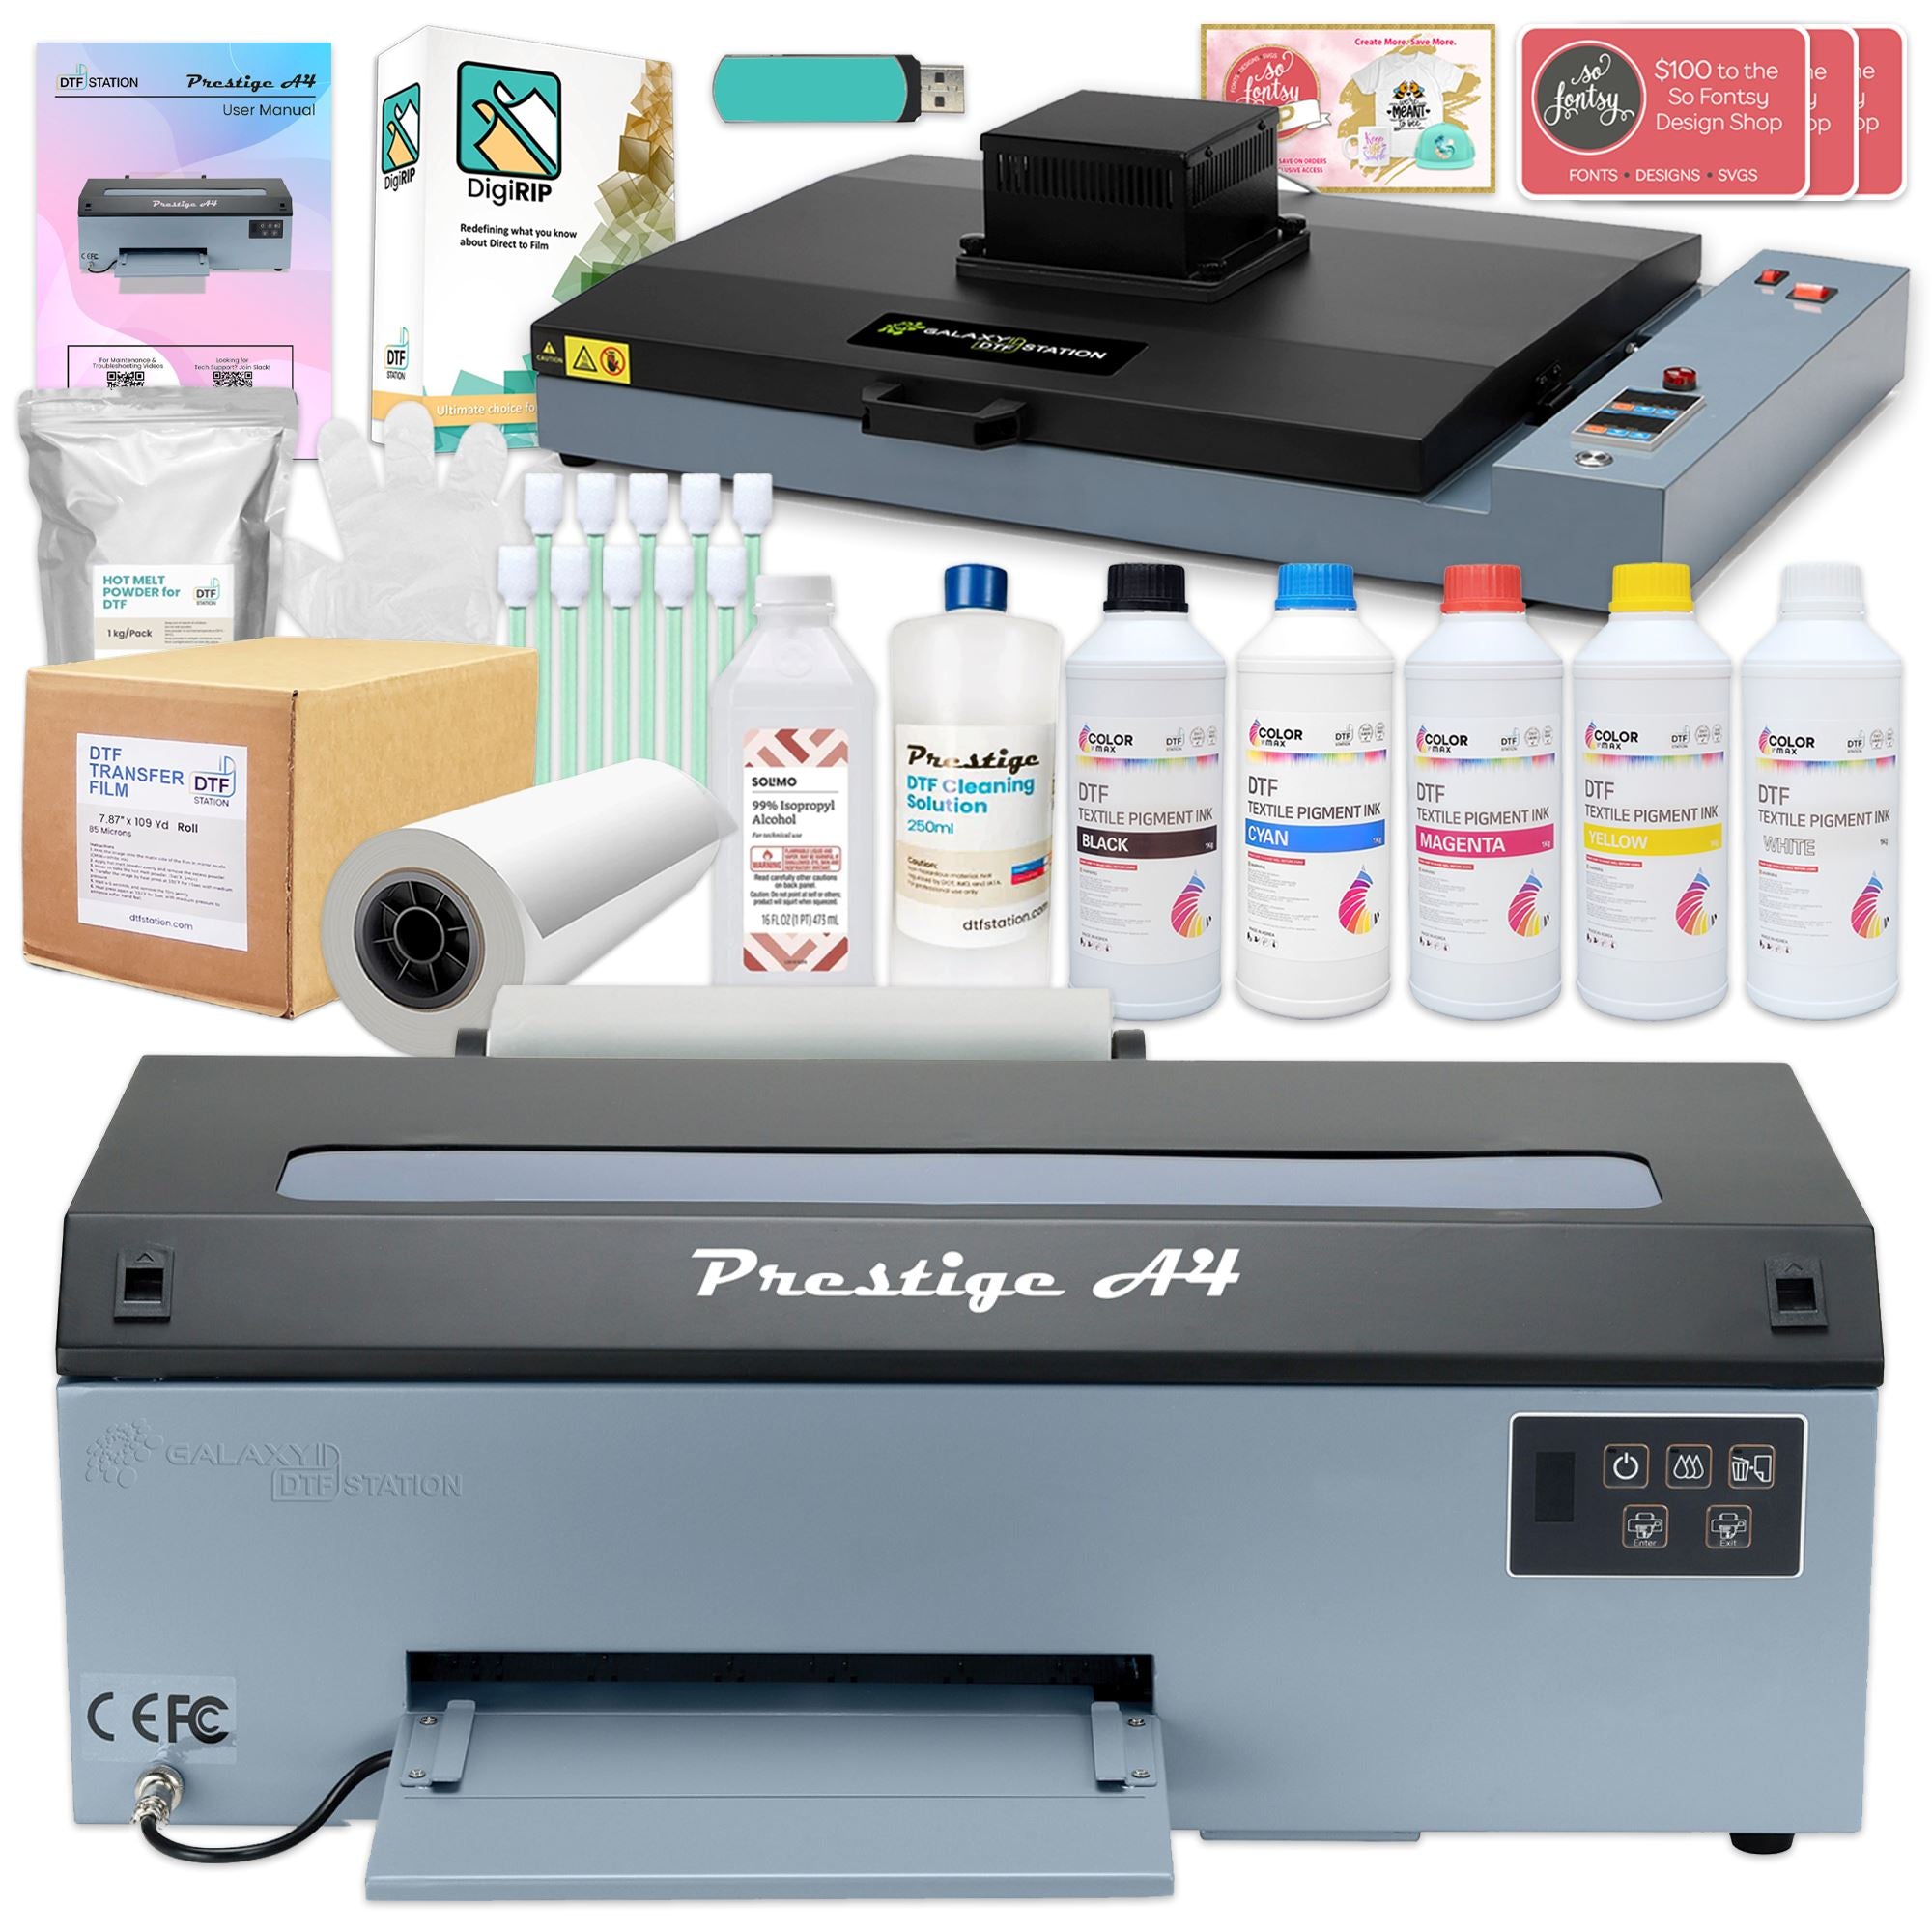 DTF Oven & Air Filter Set Up: Getting Started with Prestige A3+ DTF Printer  